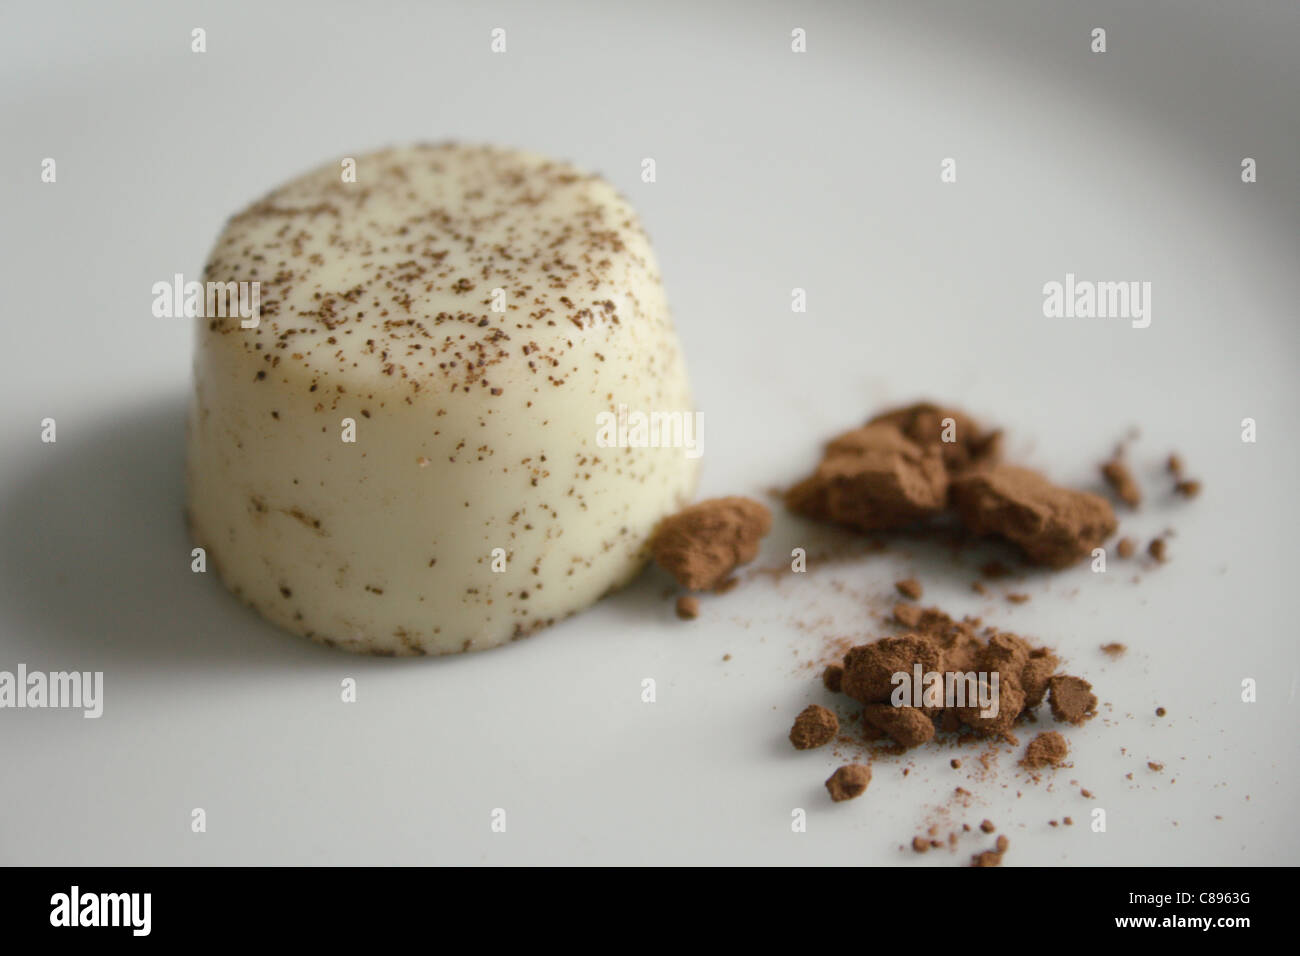 White chocolate and cocoa powder Stock Photo